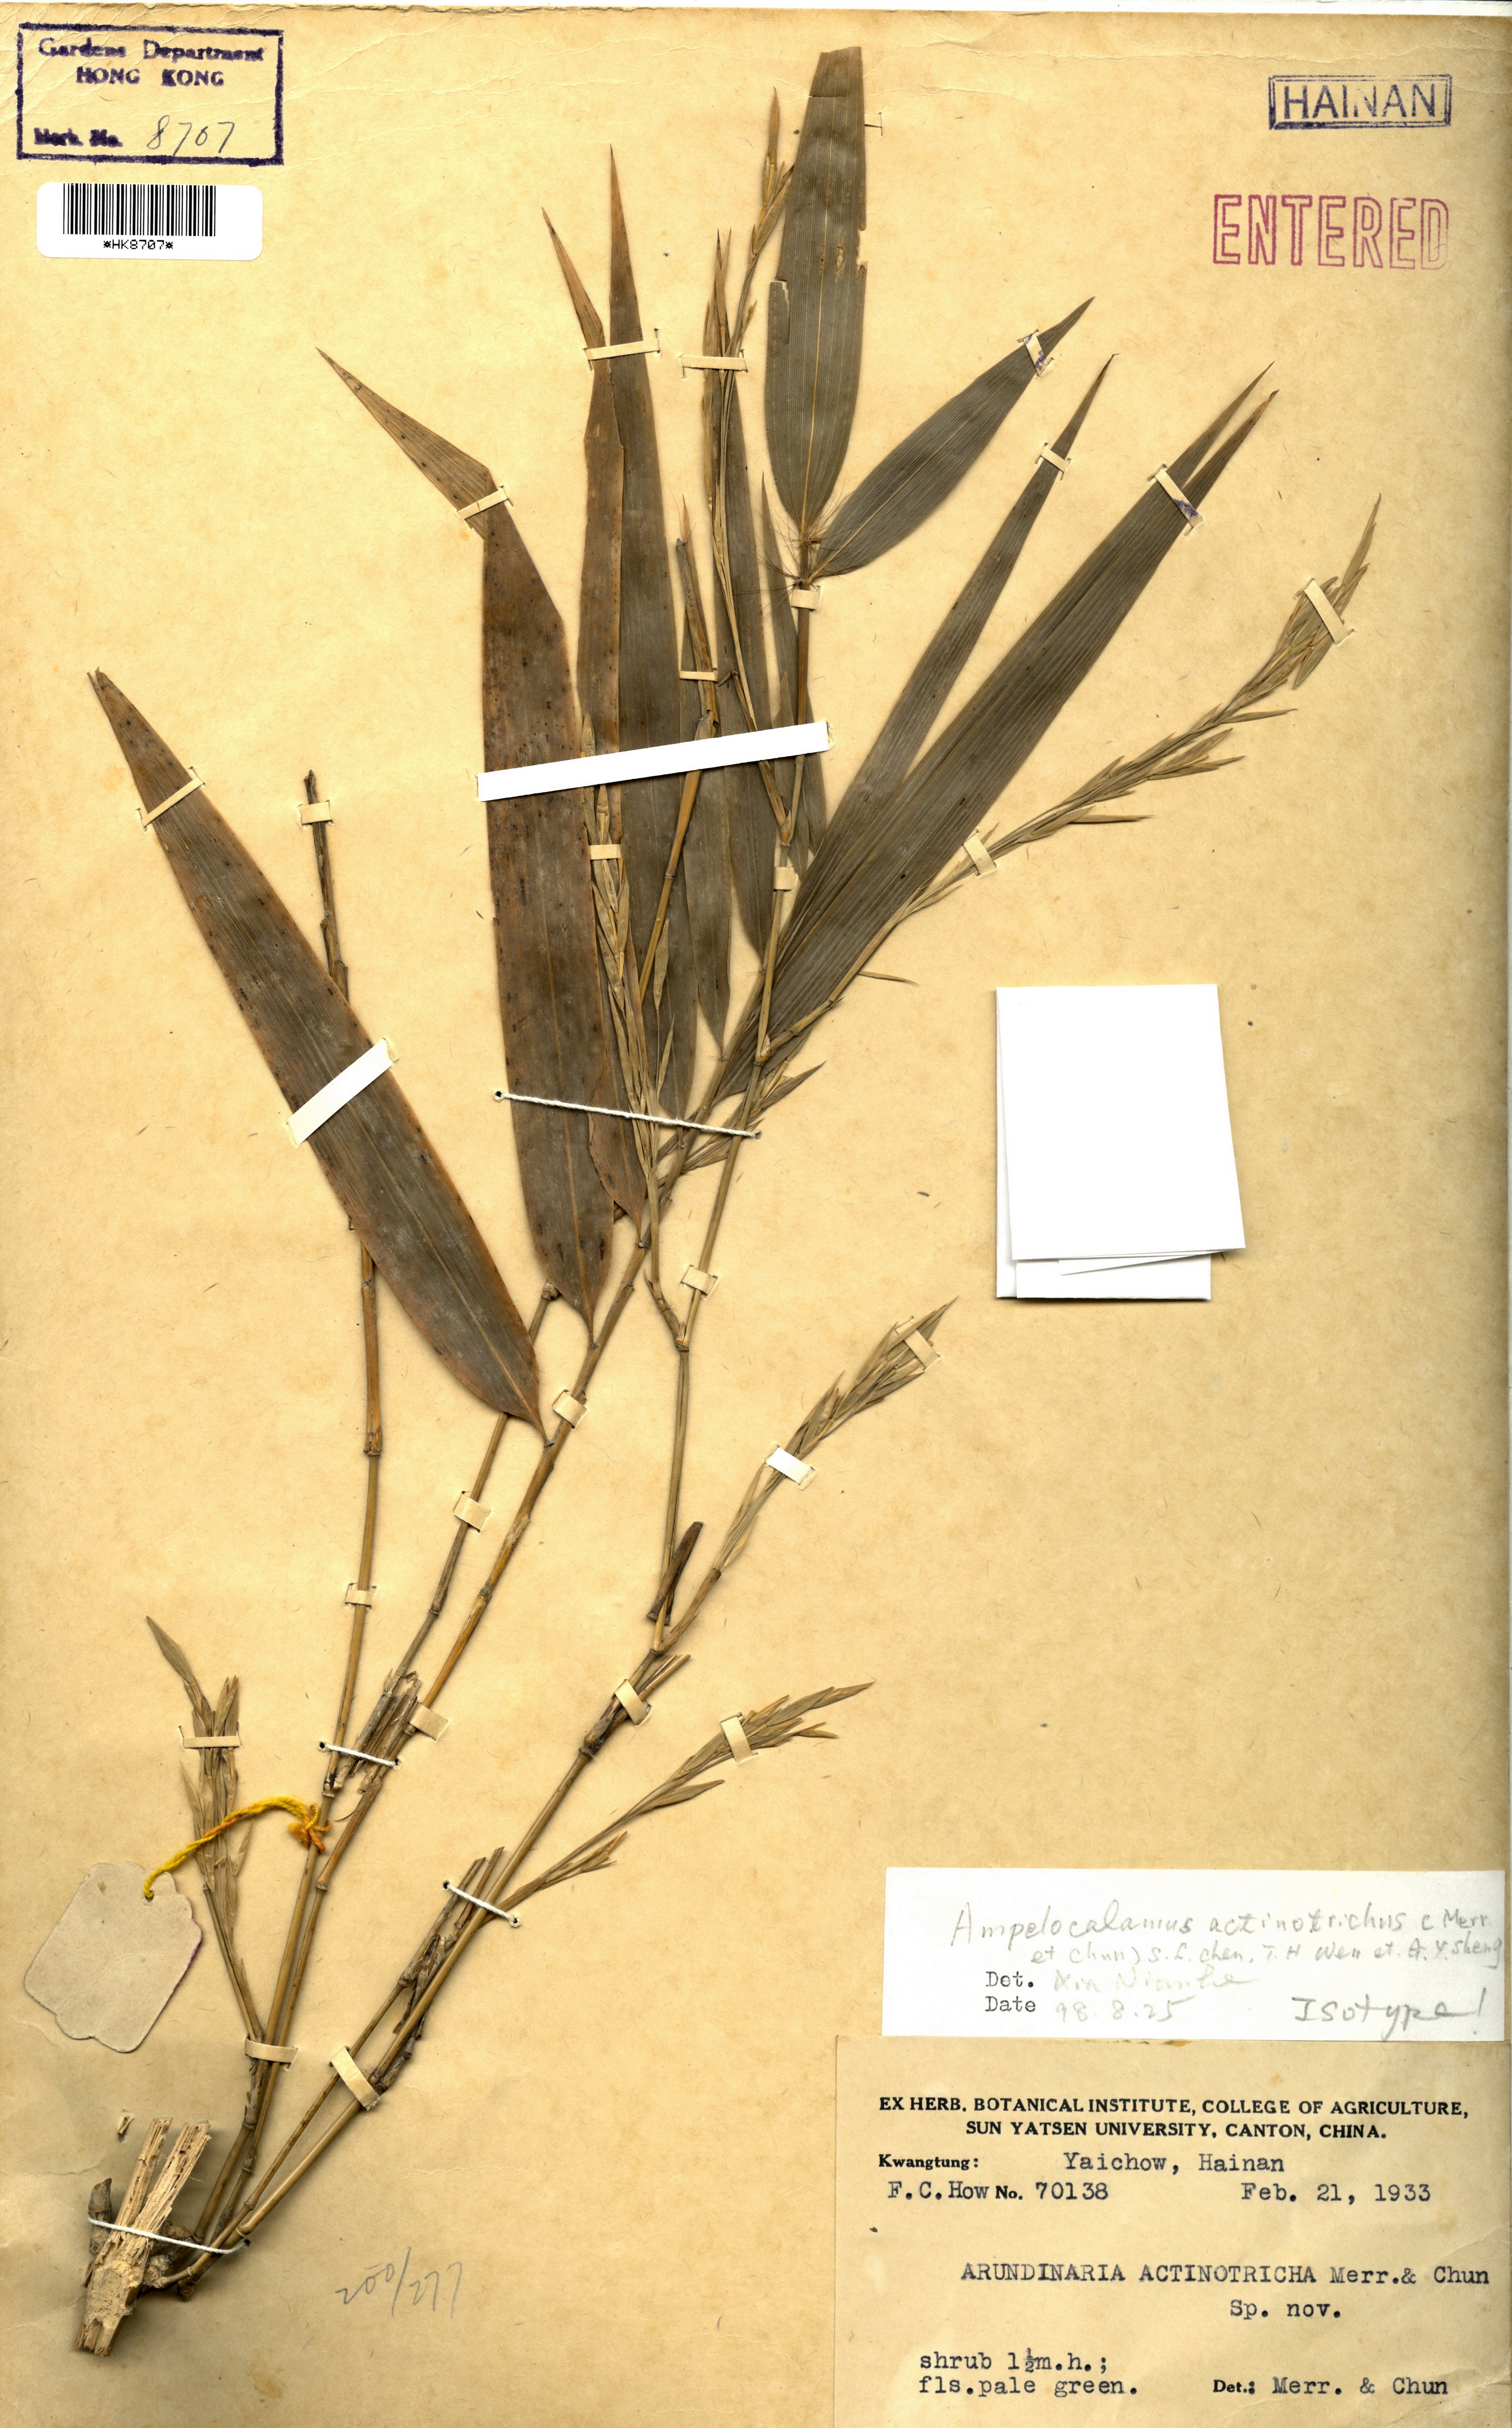  Ampelocalamus actinotrichus (Merr. & Chun.) S.L. Chen, T.H. Wen et G.Y. Sheng